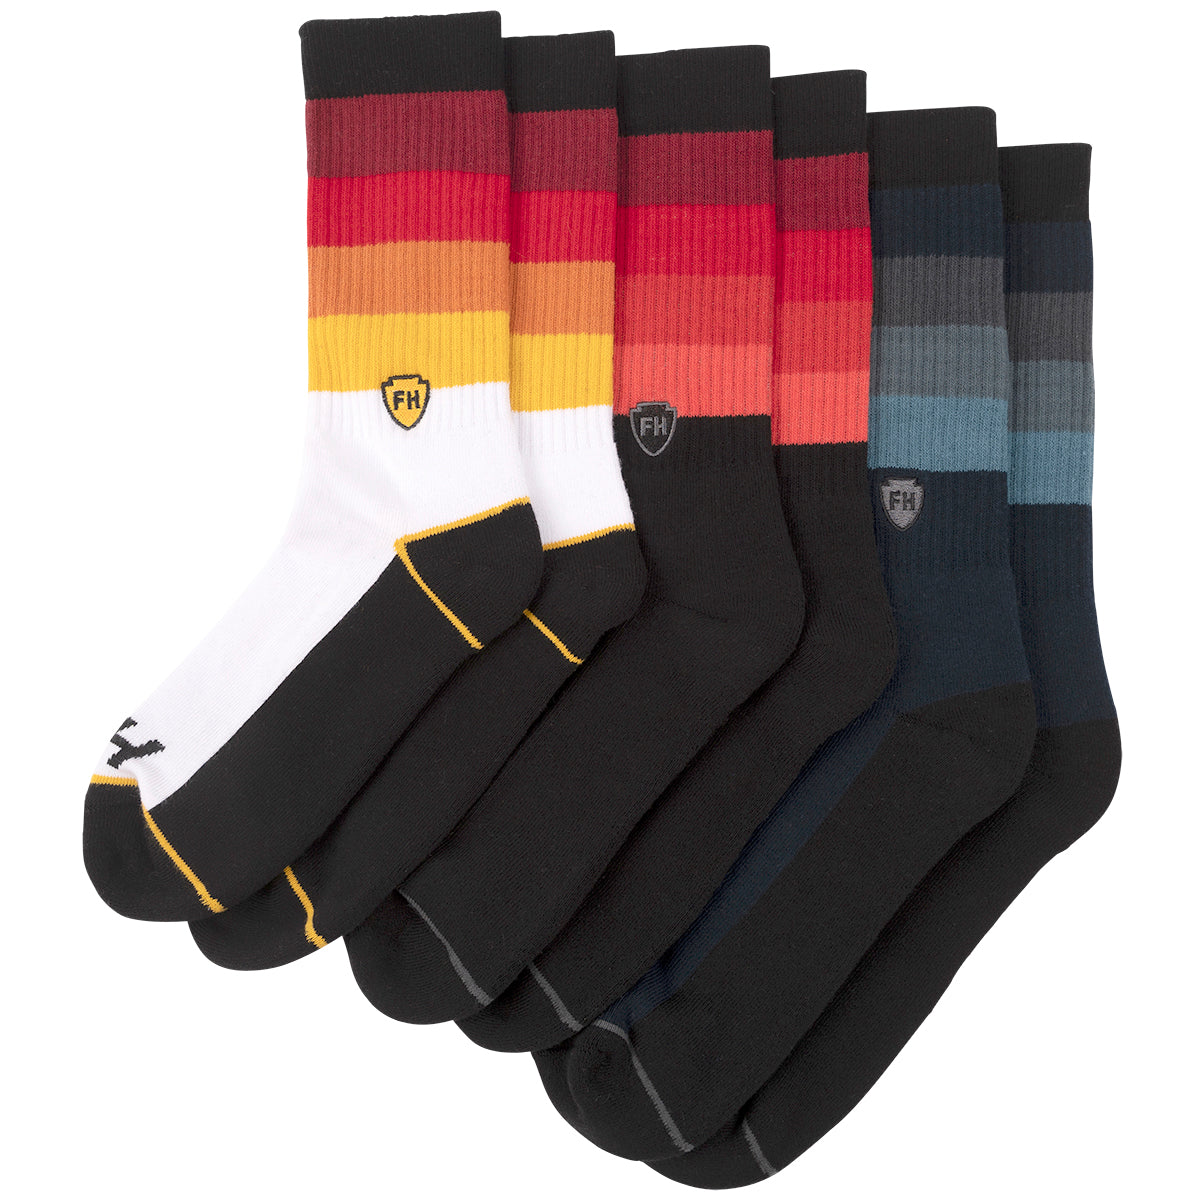 Eclipse Socks, 3-Pack - Multi